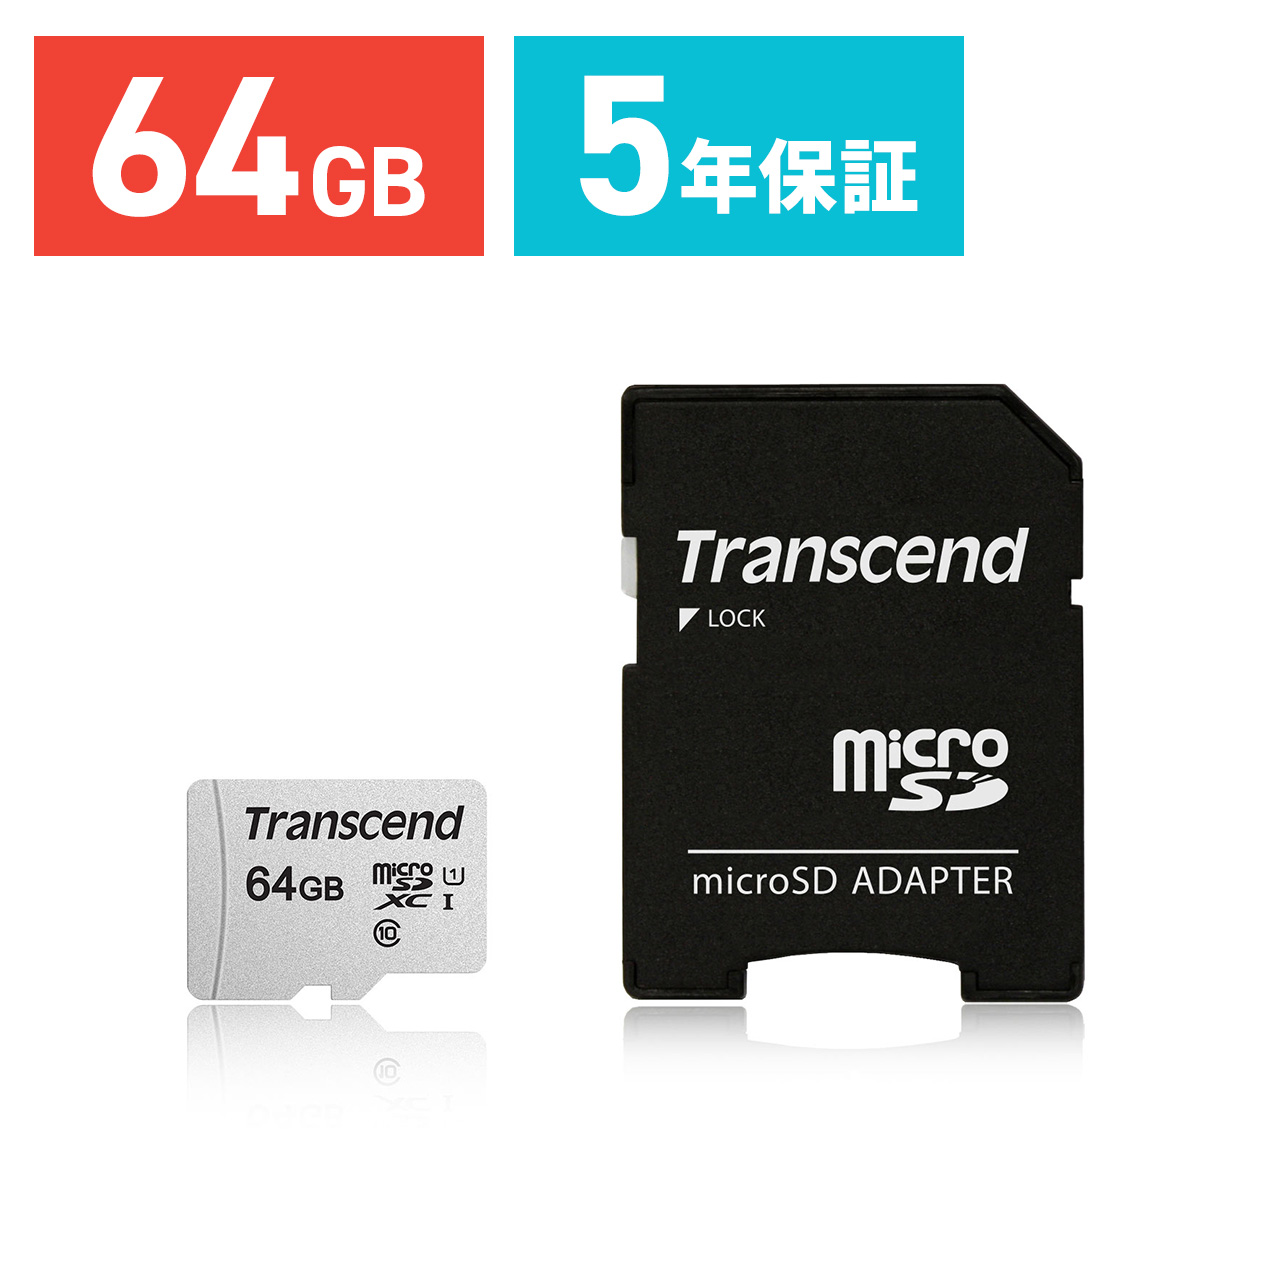 microSDXCカード 64GB マイクロSD  Class10 UHS-I U1 SD変換アダプタ付き TS64GUSD300S-A